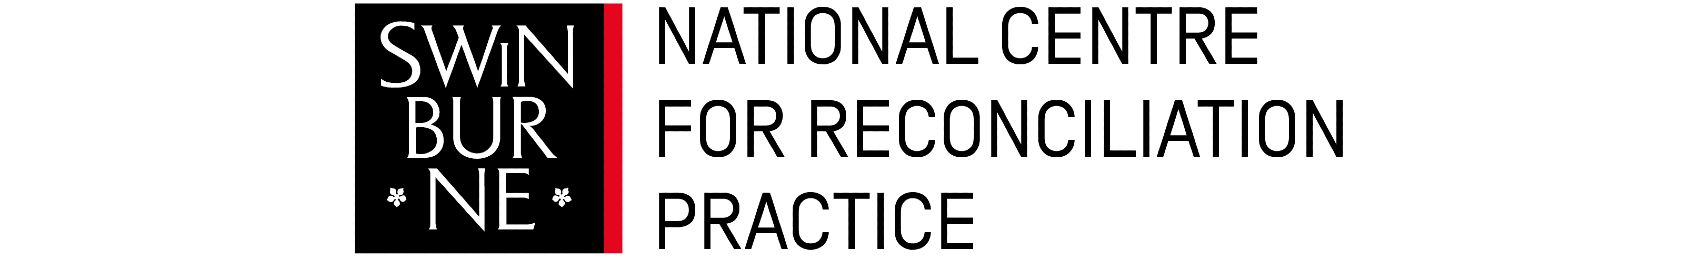 Swinburne National Centre for Reconciliation Practice logo